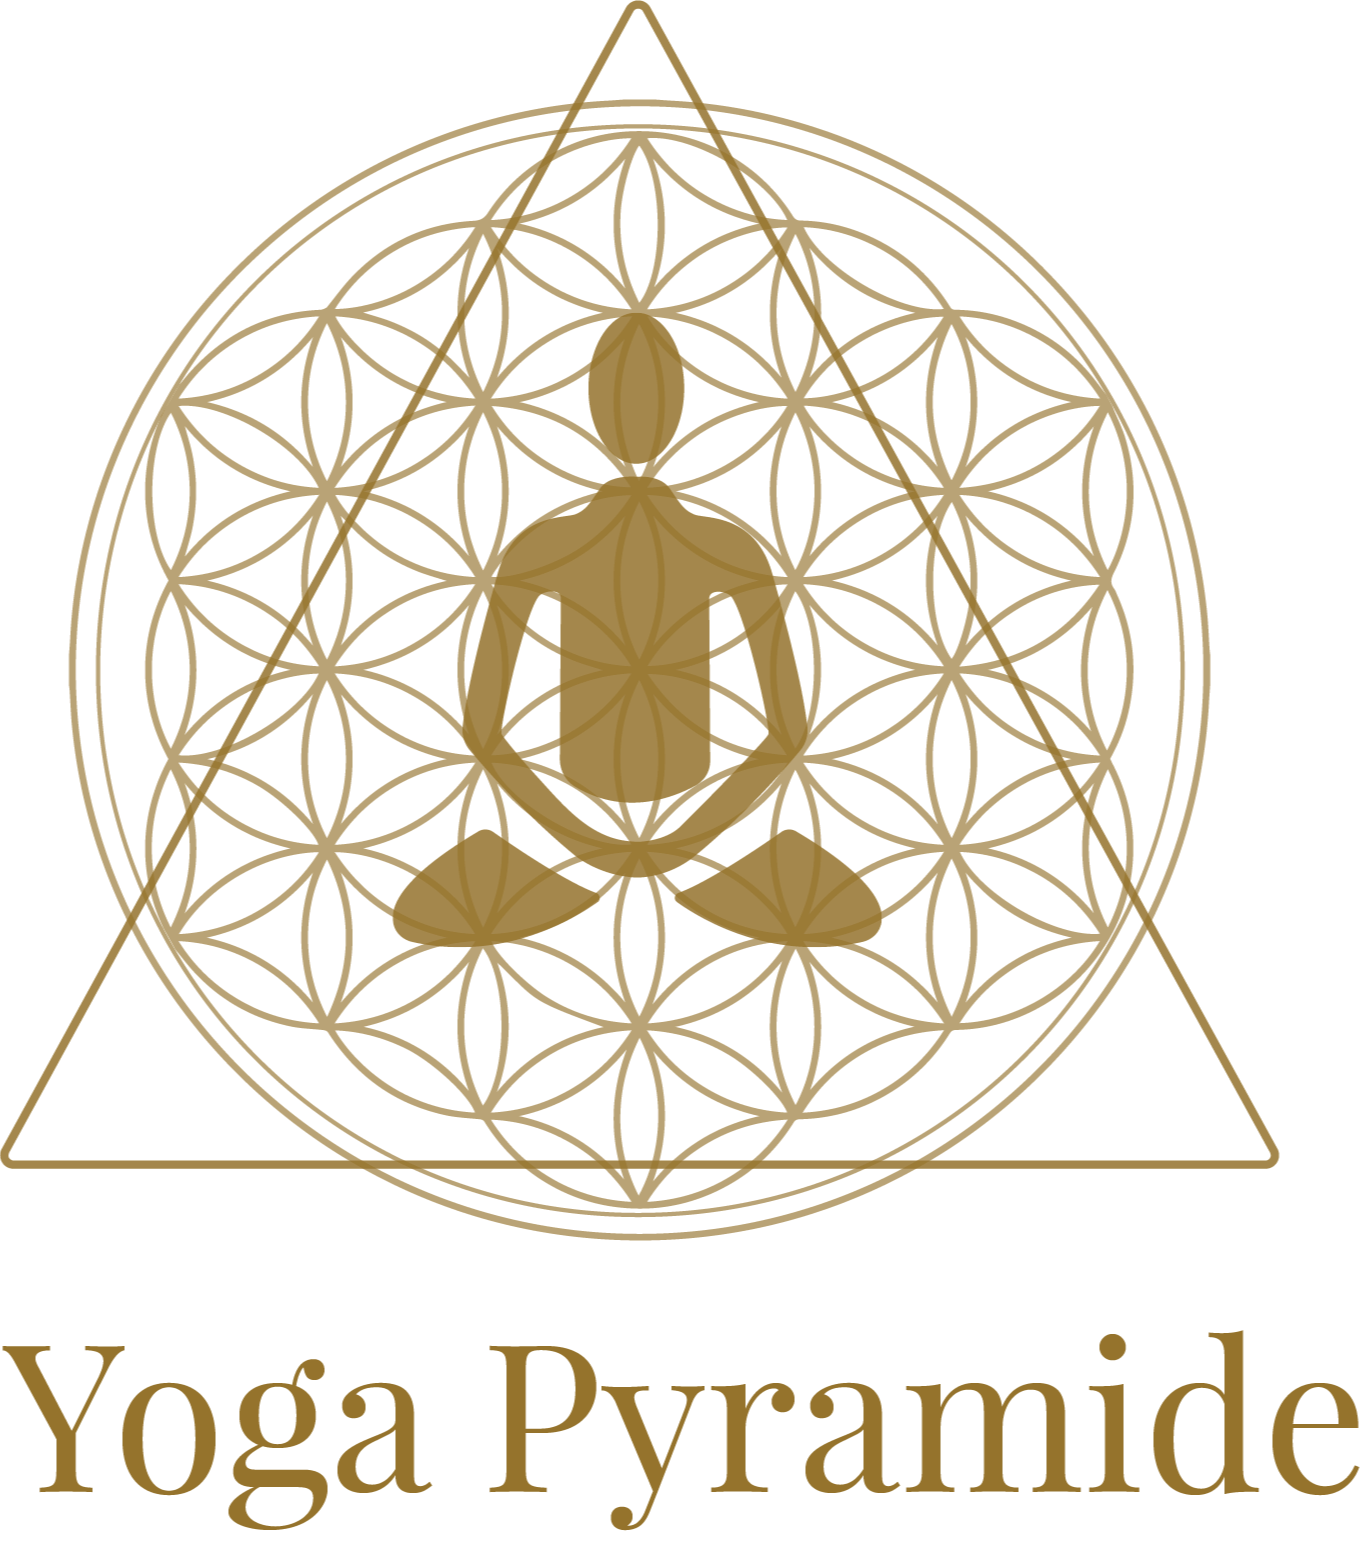 Yoga Pyramide Chur